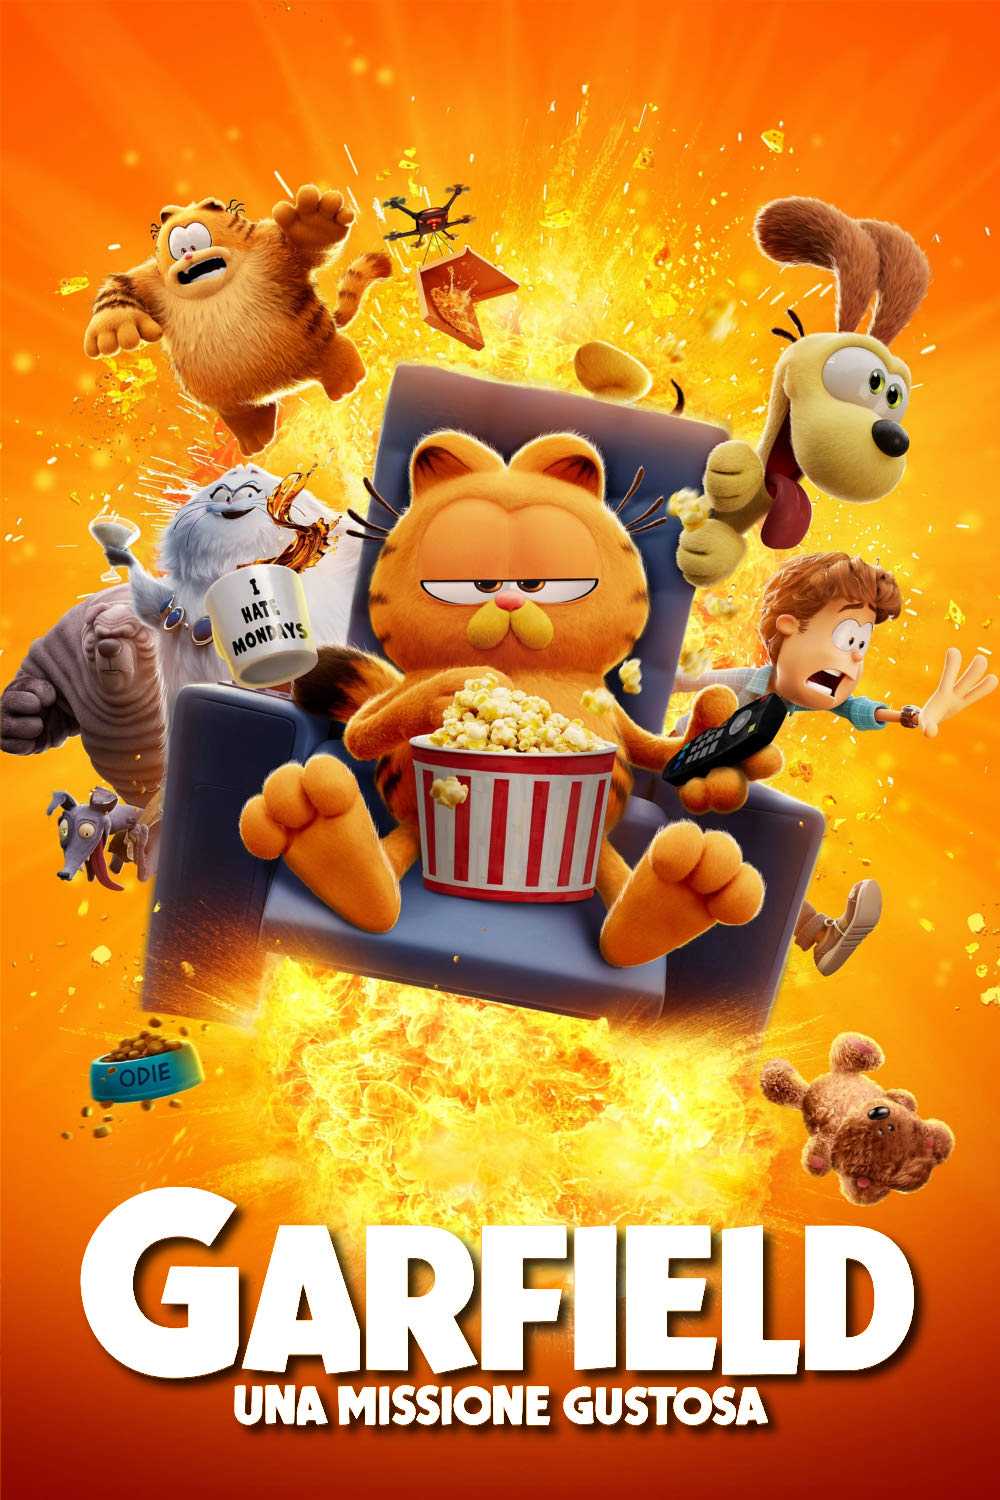 Garfield - Una missione gustosa in streaming